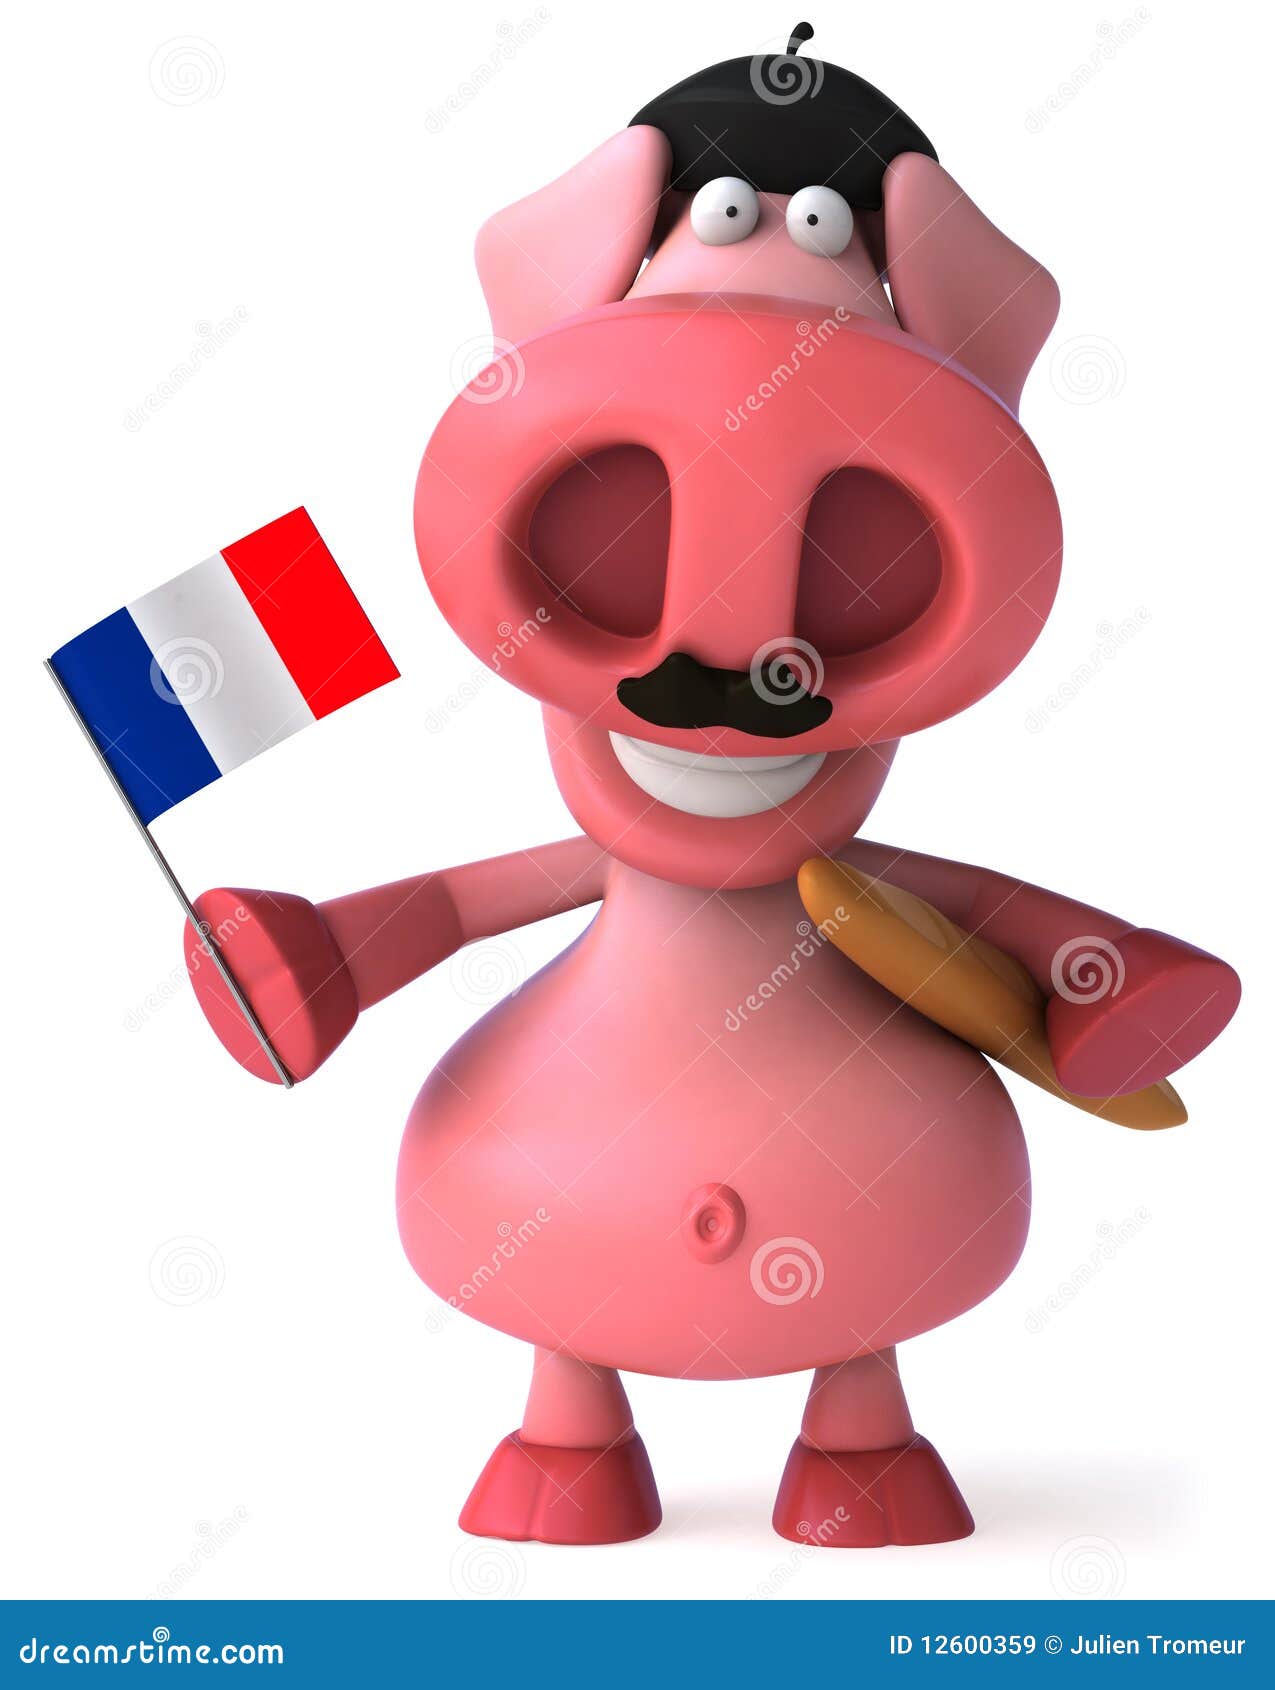 Франция свинья. Французская свинья. Свинья француз. Свинья во Франции. Свинья с французским флагом.